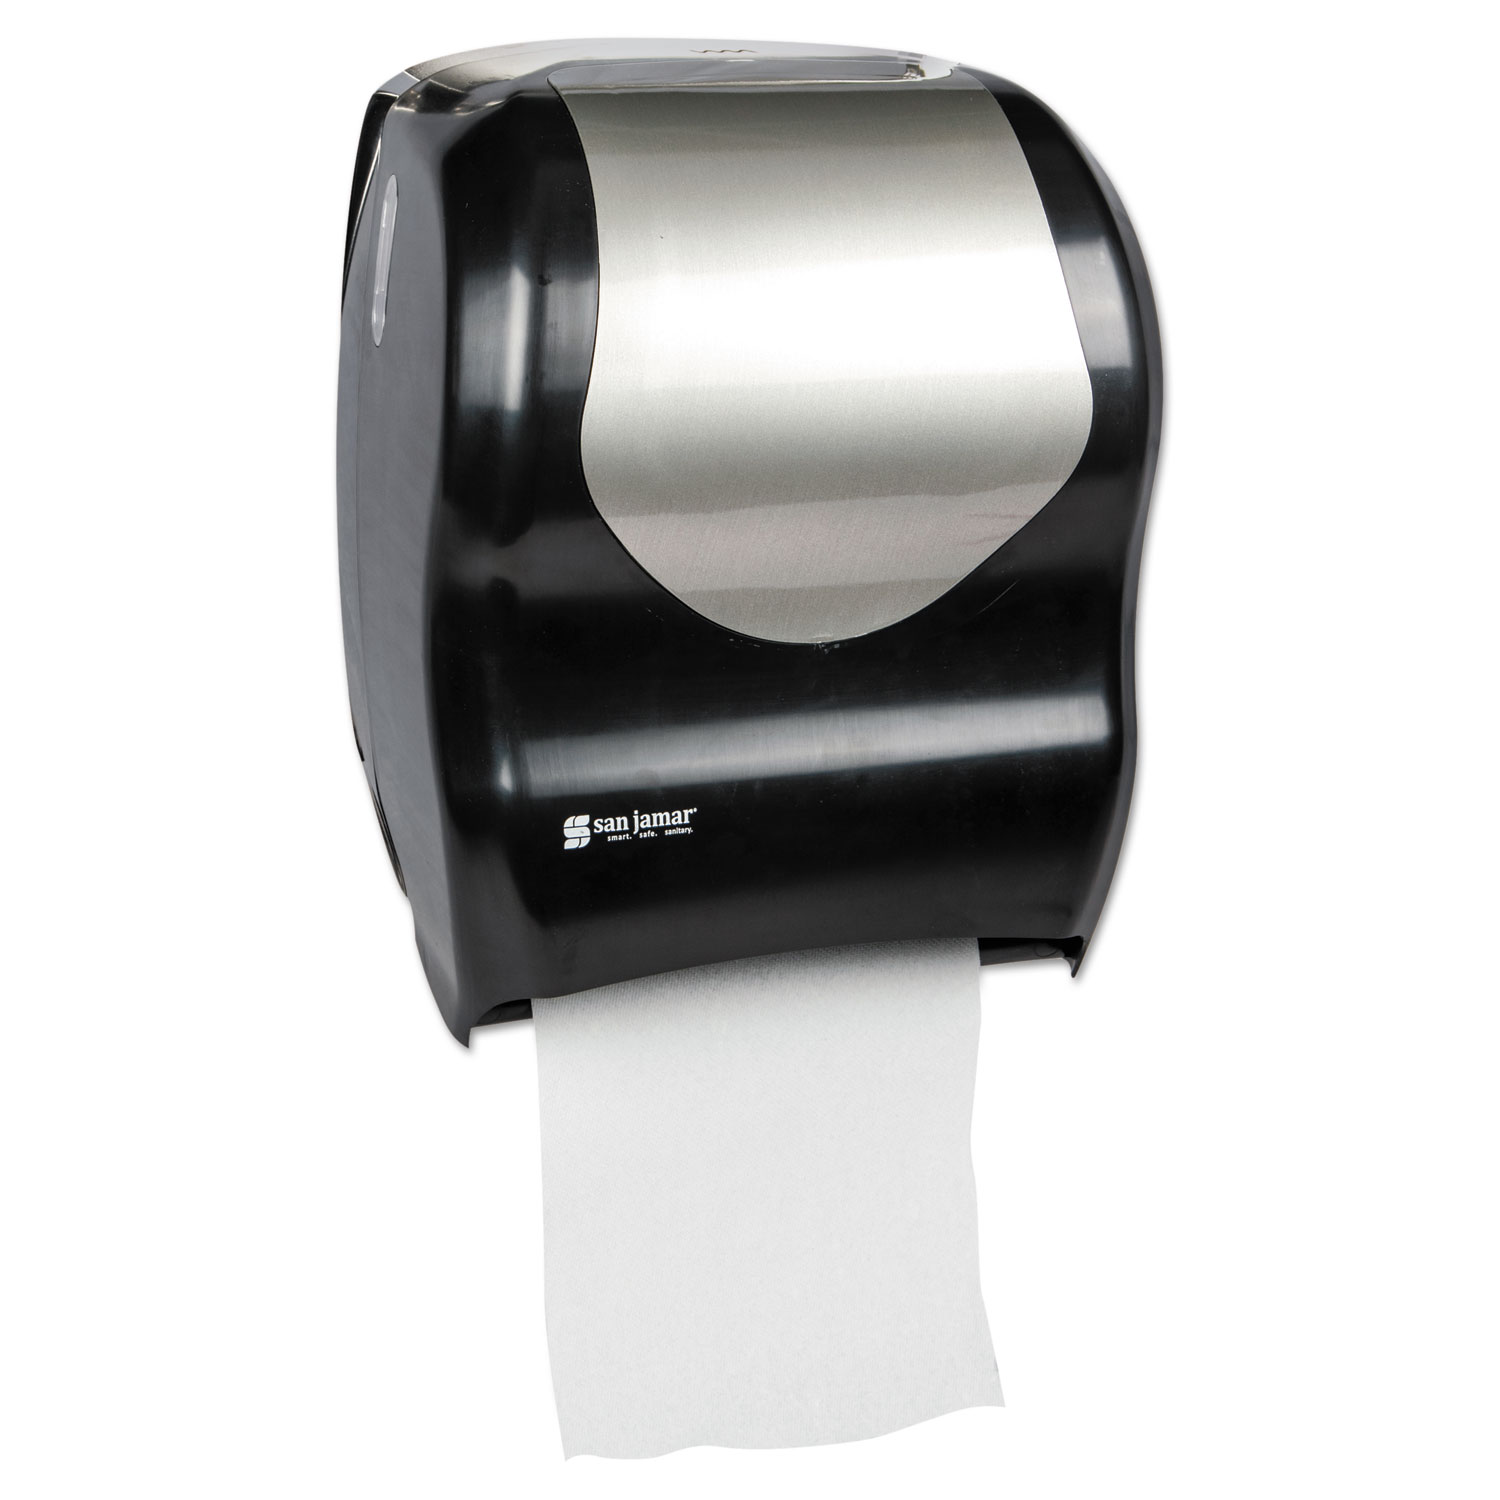  San Jamar T1370BKSS Tear-N-Dry Touchless Roll Towel Dispenser, 16 3/4 x 10 x 12 1/2, Black/Silver (SJMT1370BKSS) 